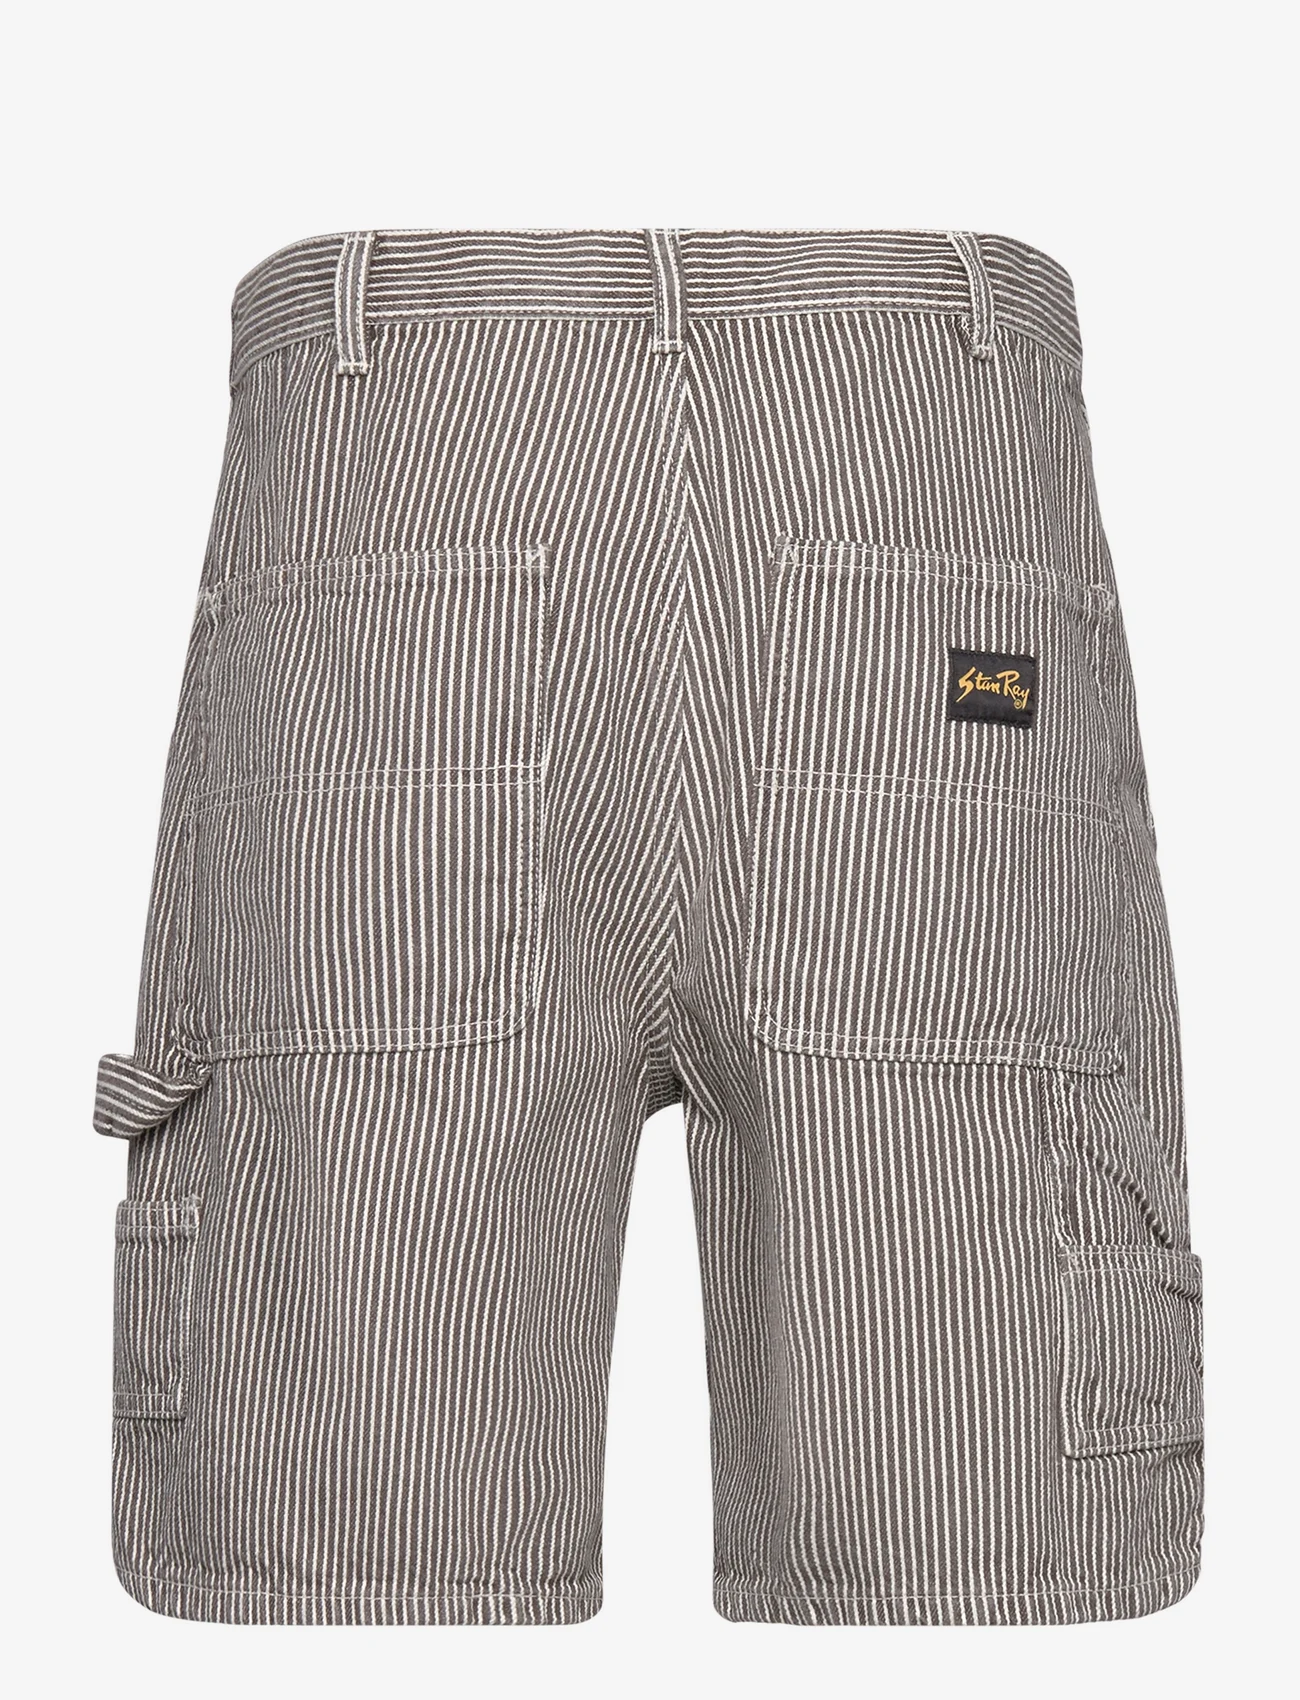 Stan Ray - BIG JOB SHORT - cargo shorts - black stone hickory - 1